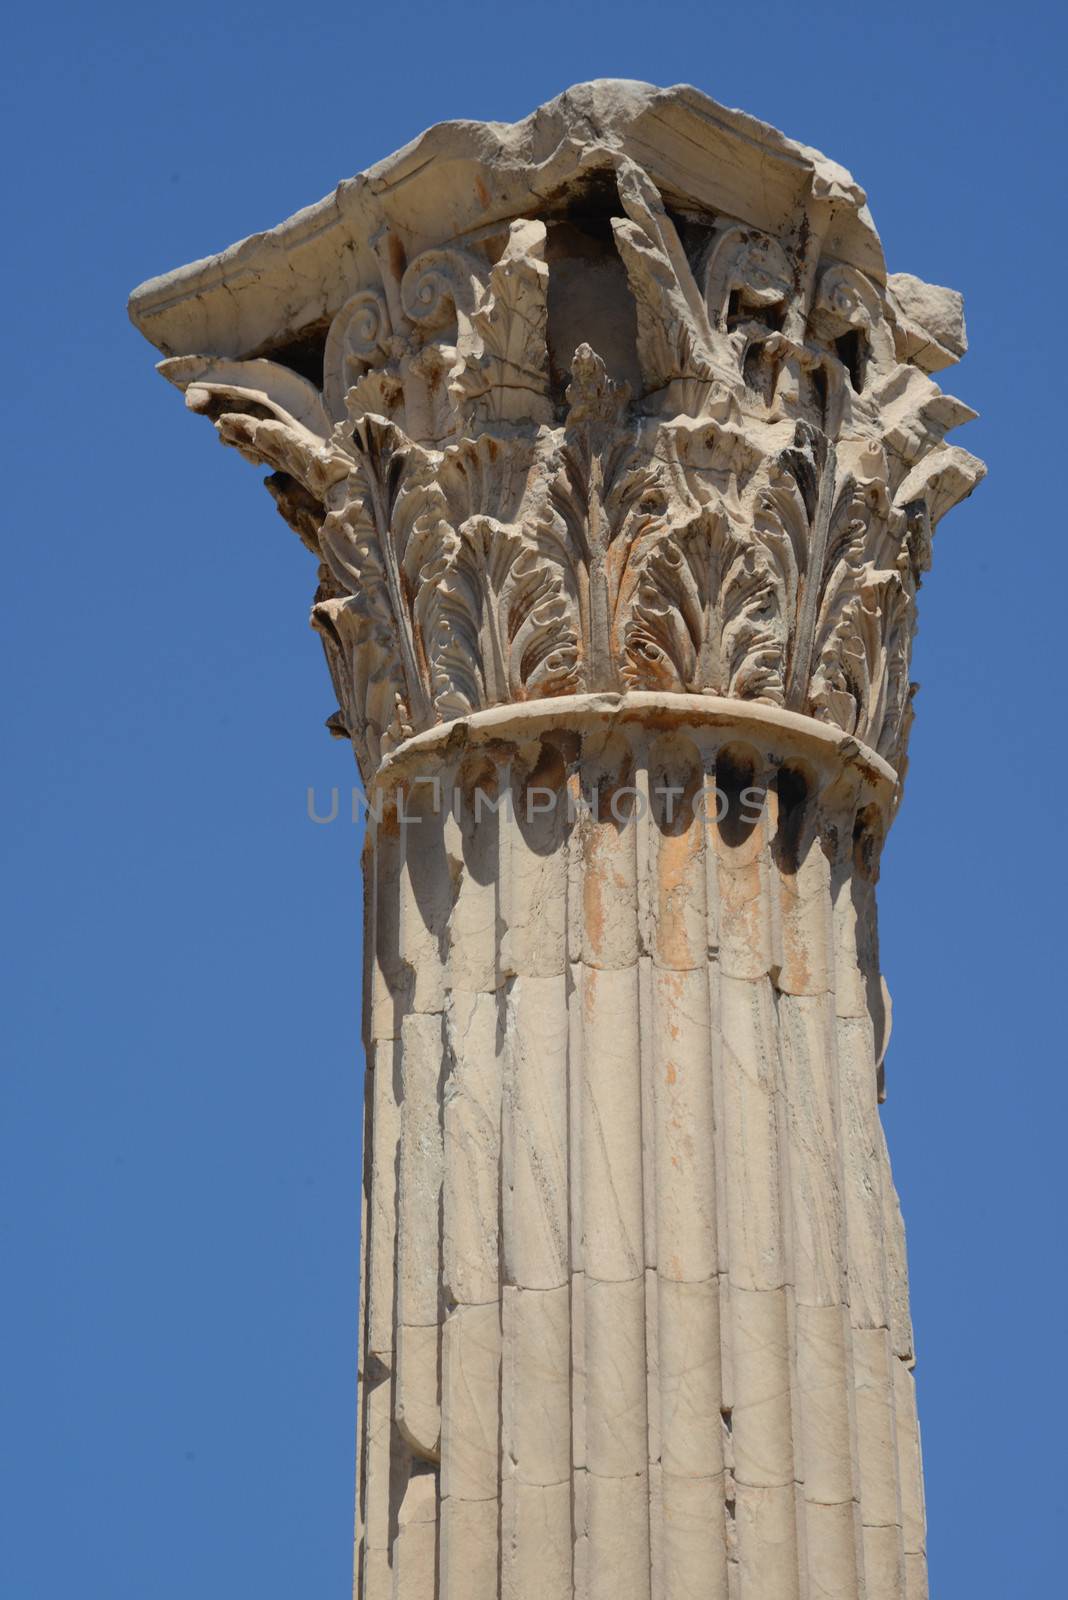 a historical column in Athens, Greece